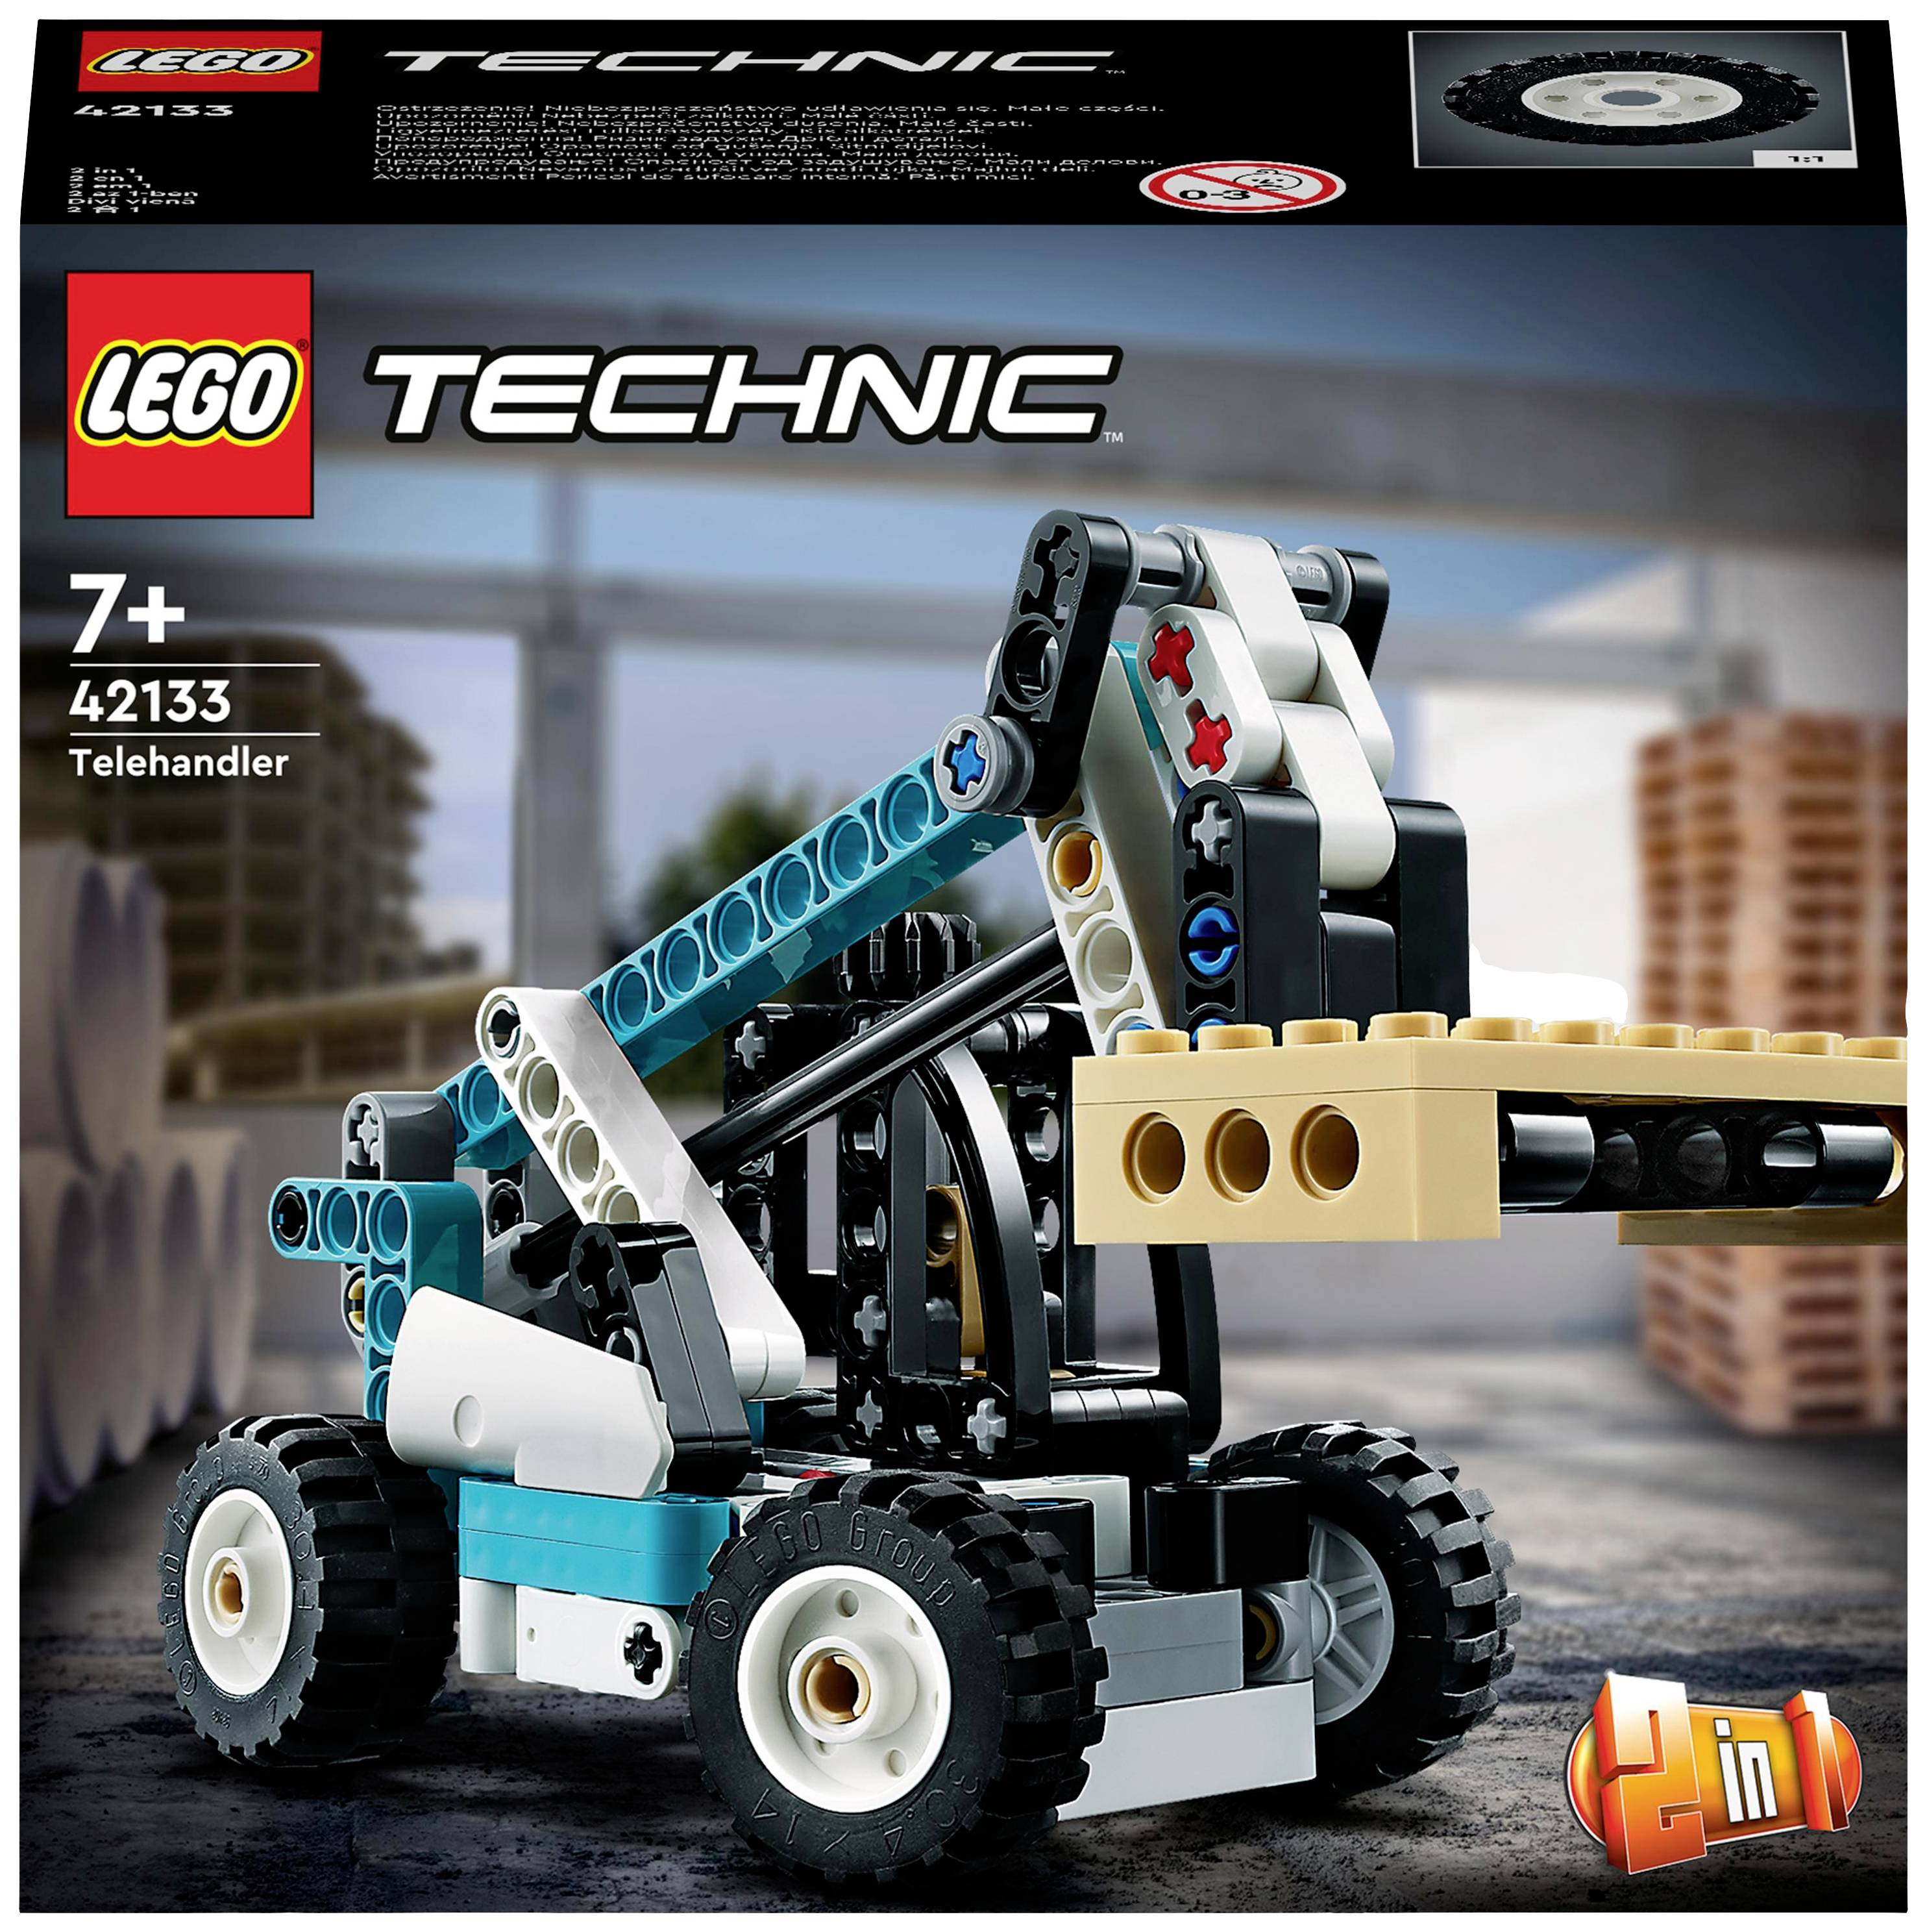 Banyan ontploffing zoogdier LEGO® TECHNIC 42133 Telescooplader kopen ? Conrad Electronic